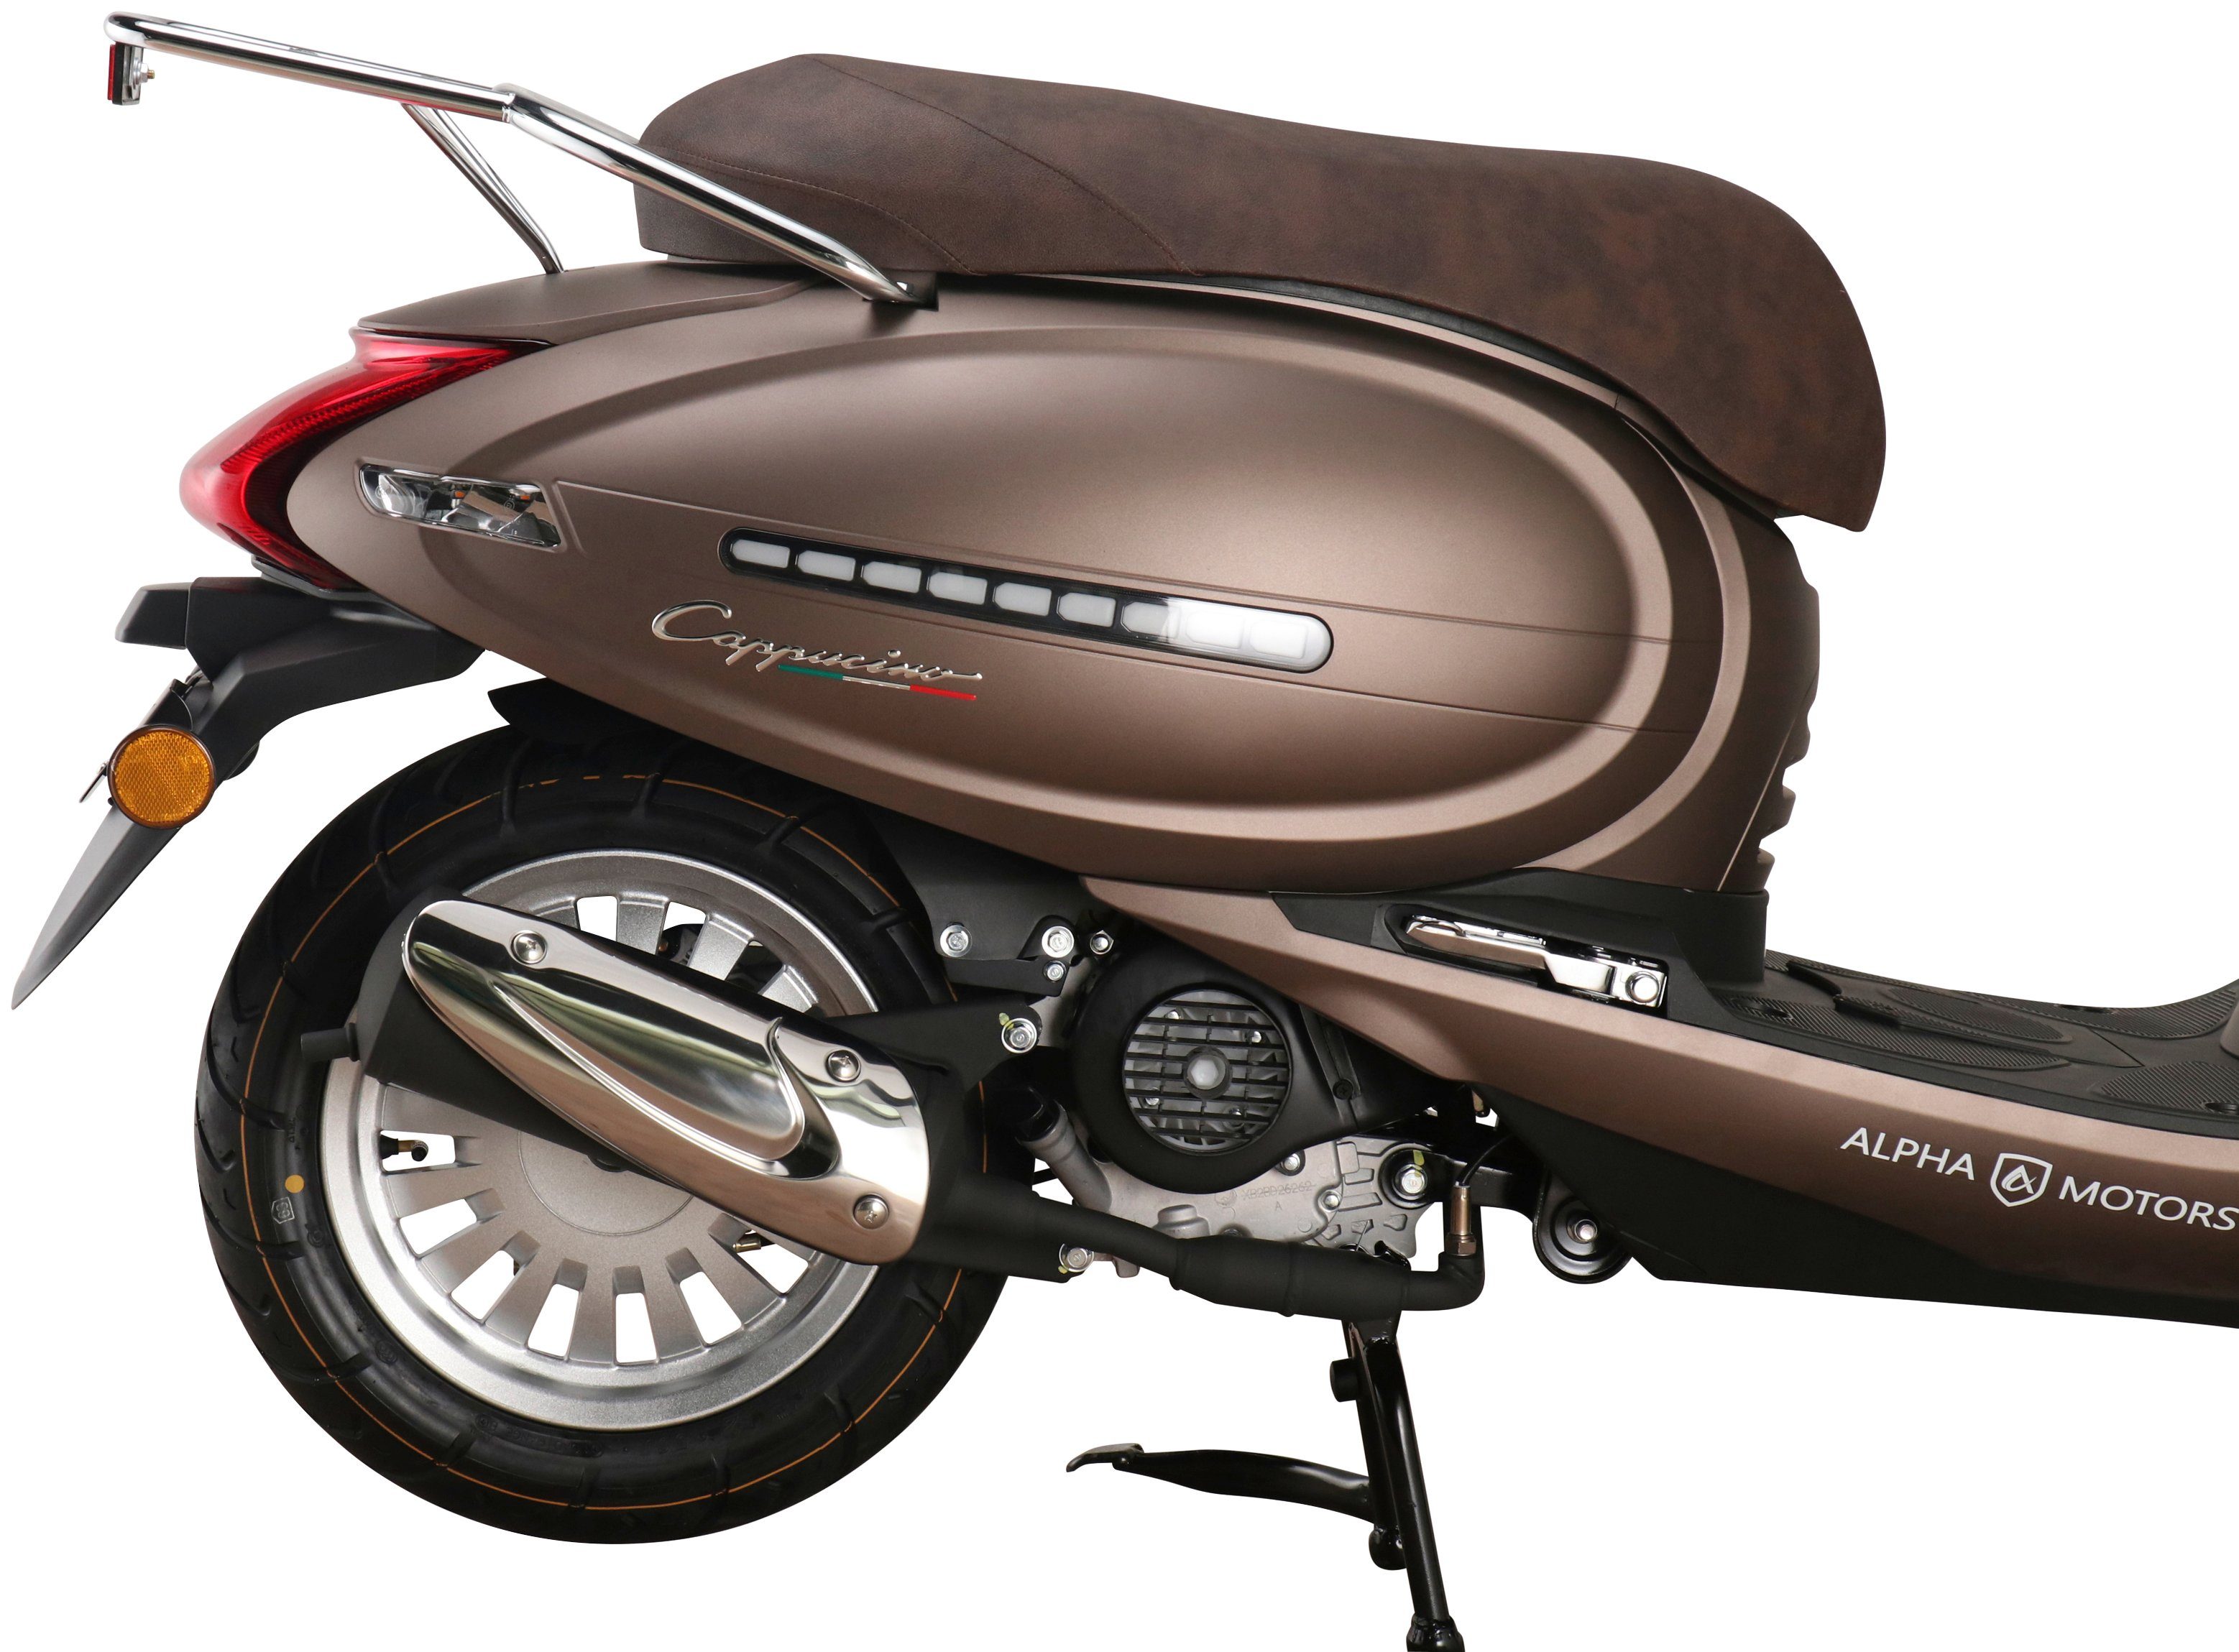 Alpha Motors Motorroller Cappucino, 125 5 km/h, 85 Euro ccm